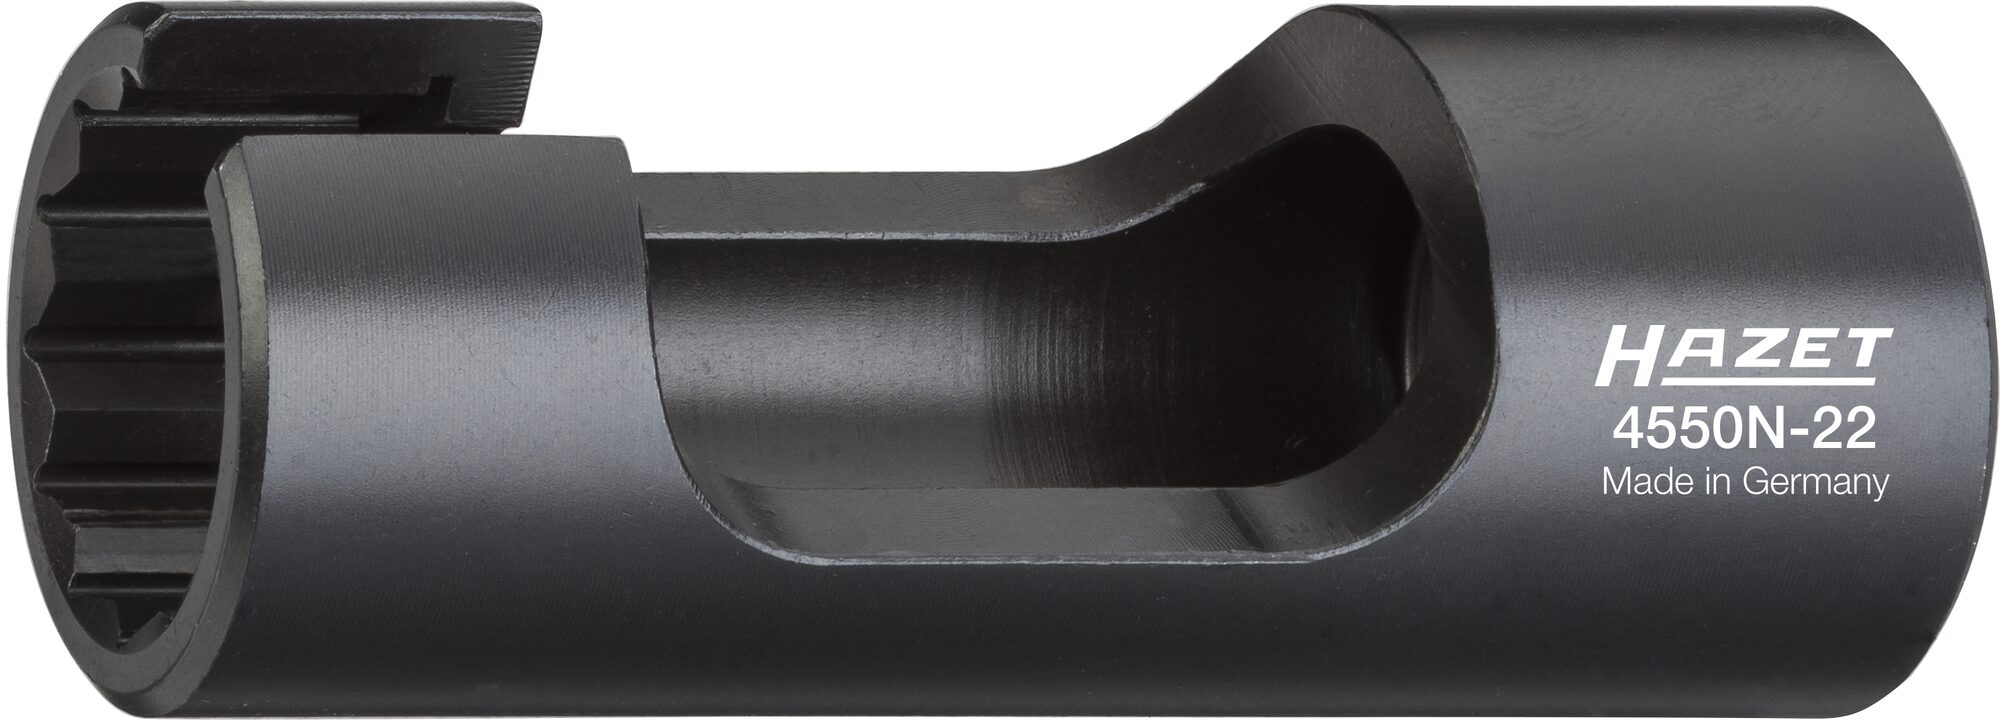 HAZET Einspritzleitungs-Schlüssel 4550N-22 · Vierkant hohl 12,5 mm (1/2 Zoll) · Außen Doppel-Sechskant Profil · 22 mm